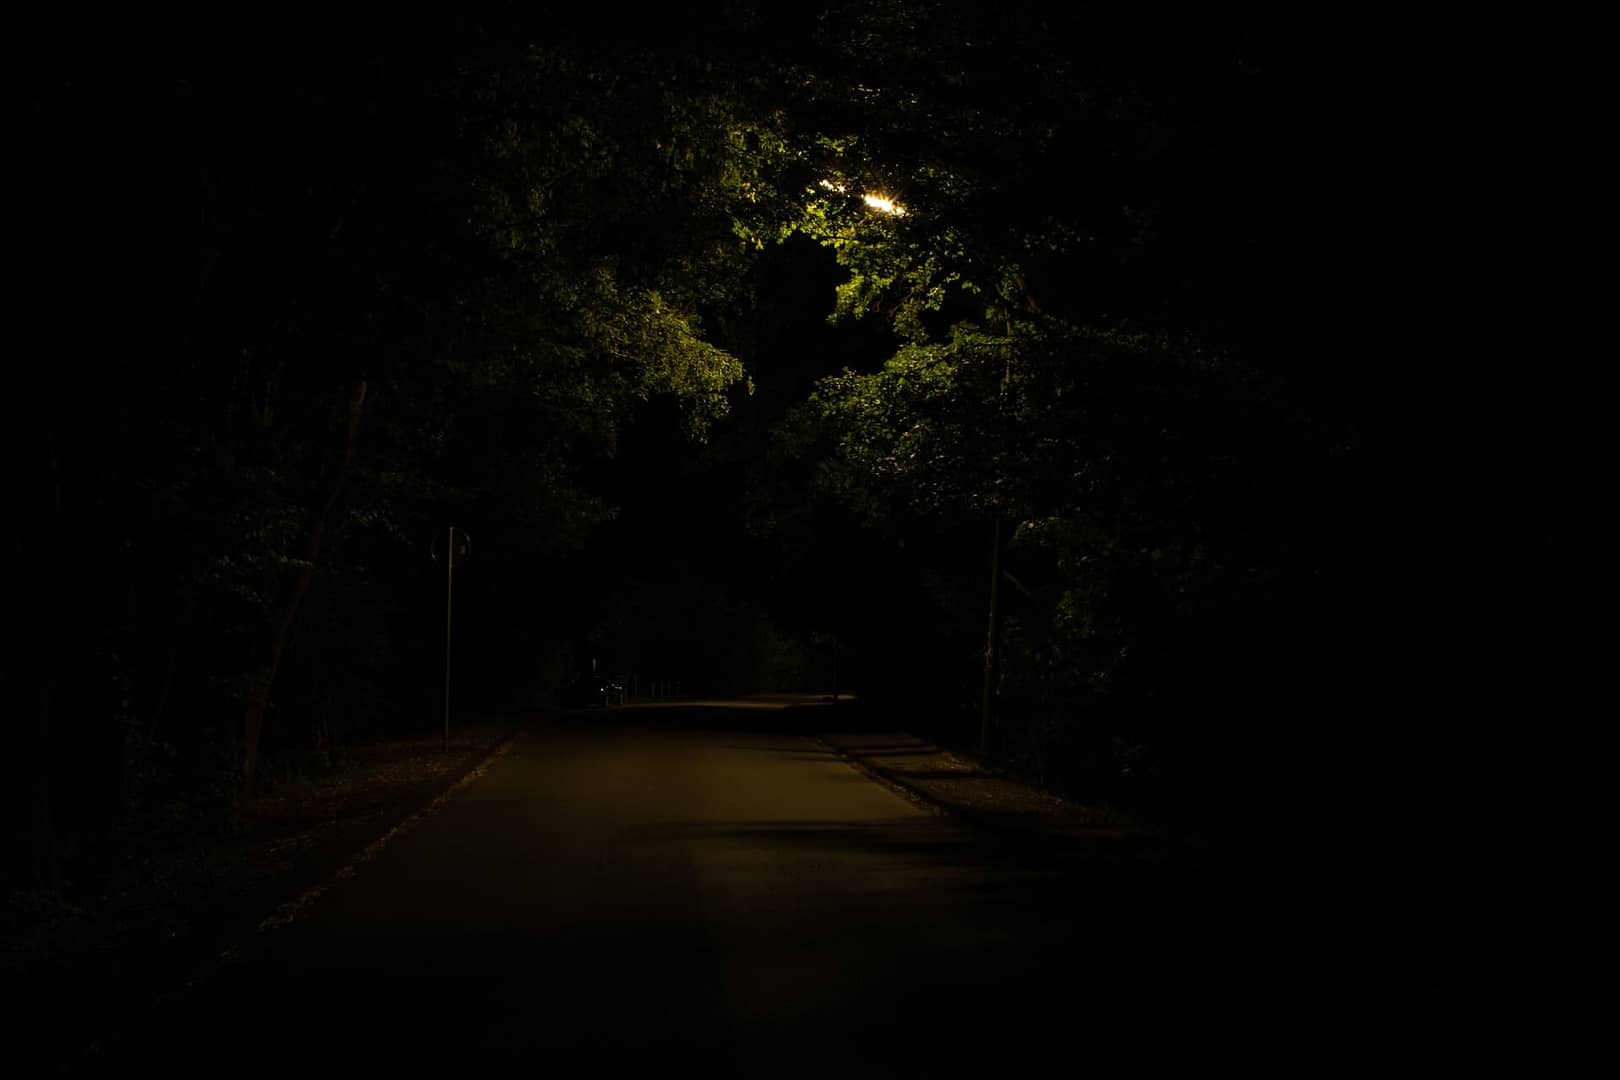 A poorly lit road